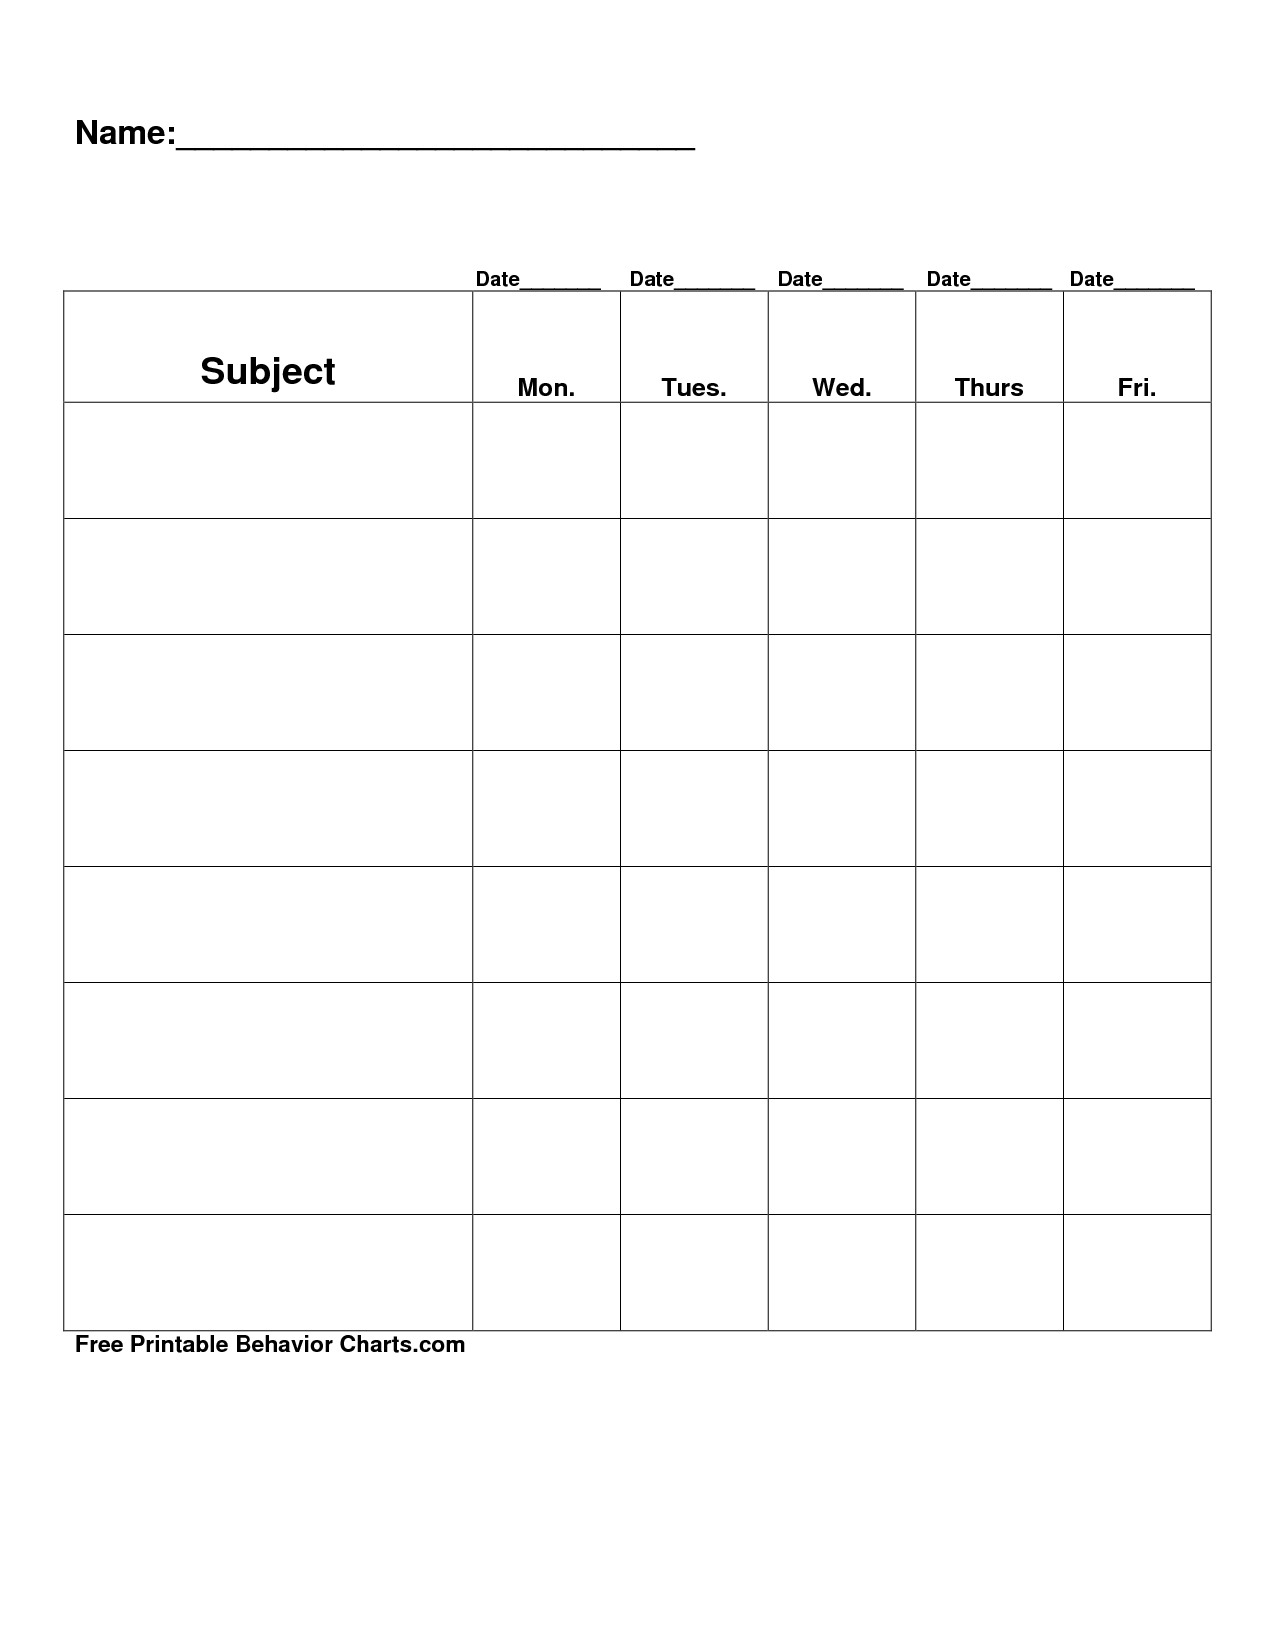 Free Printable Blank Charts | Free Printable Behavior Charts Com inside Monthly Behavior Chart Paper Printout